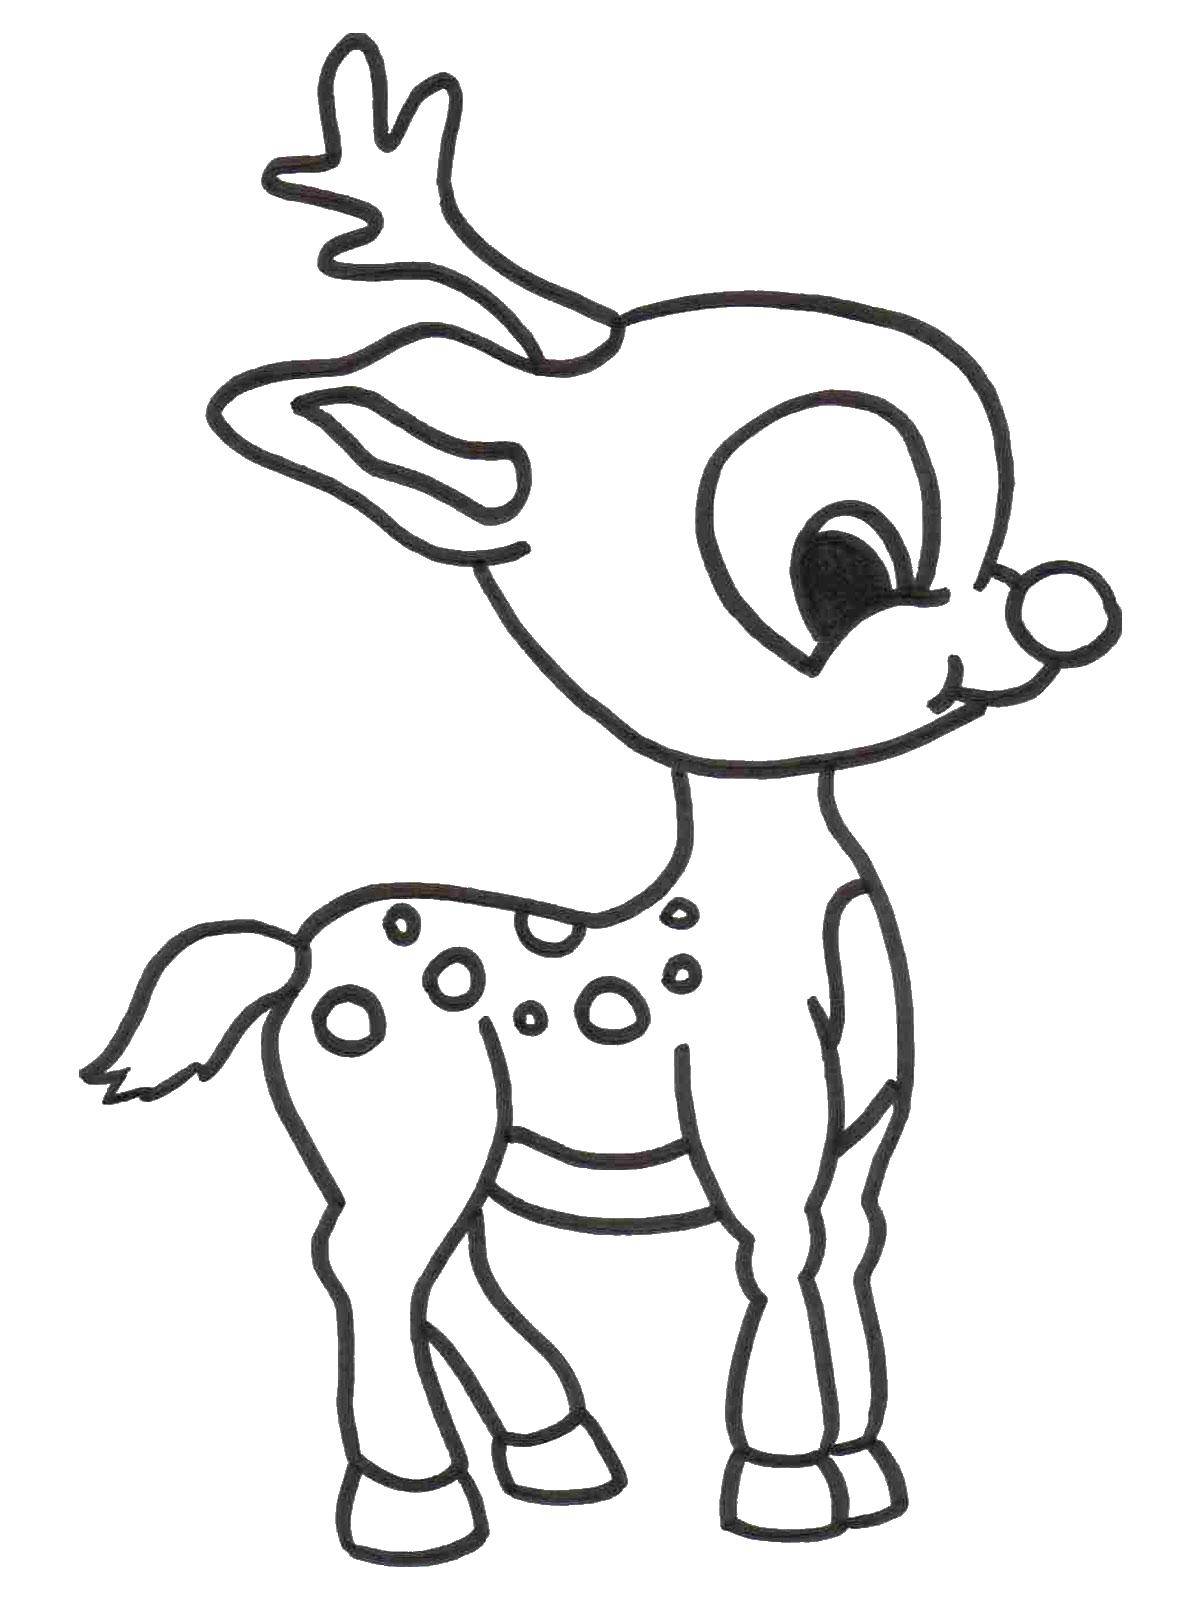 Coloring The deer Bambi. Category Disney cartoons. Tags:  Disney, deer, Bambi.